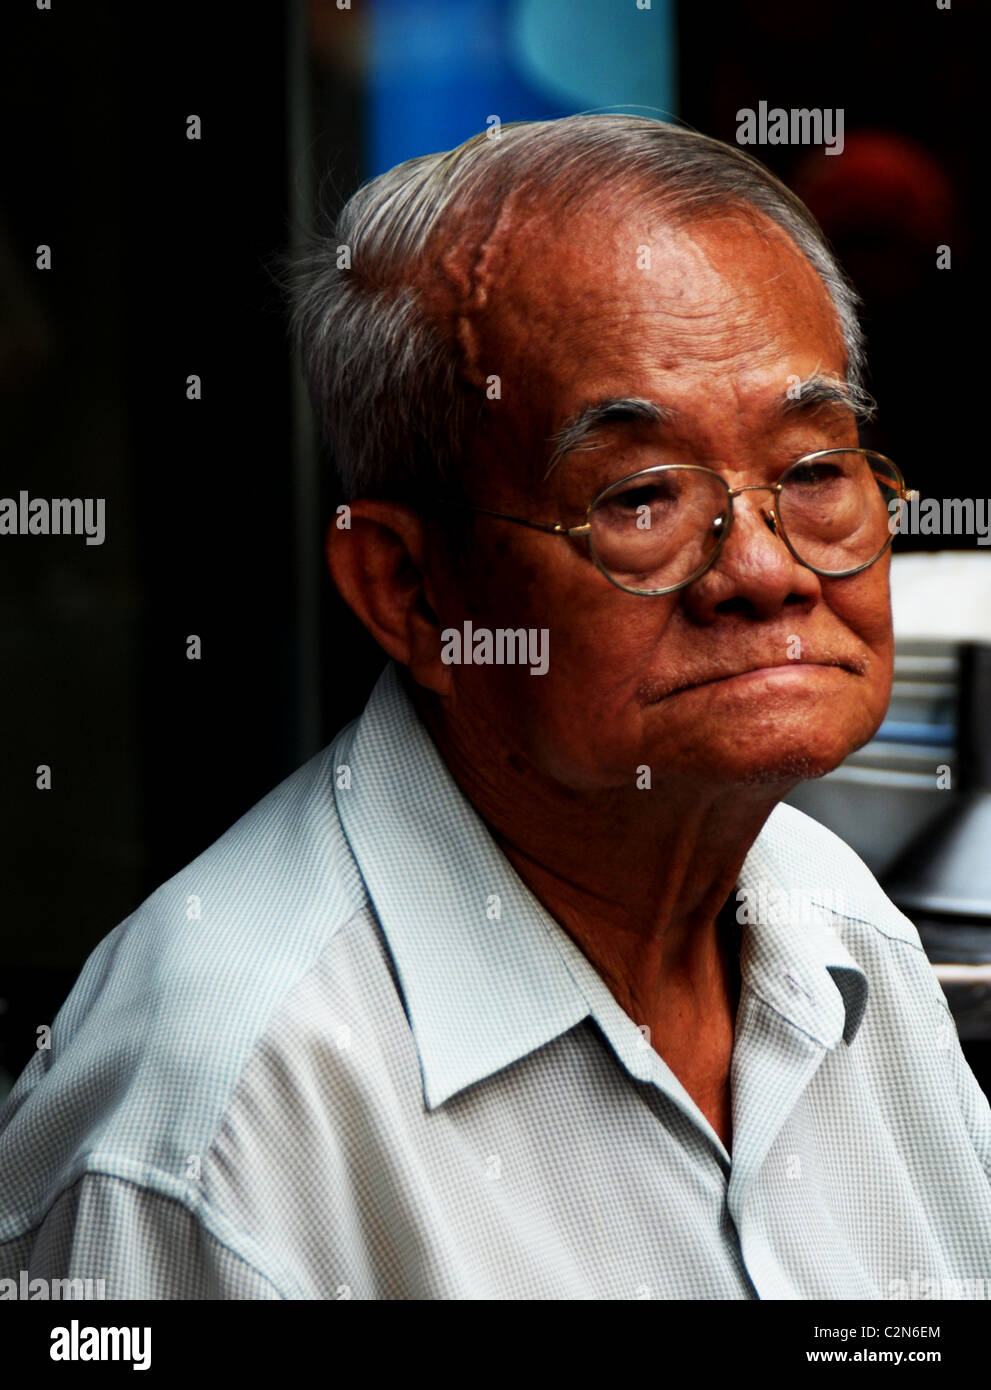 Thai uomo cinese perso nei suoi pensieri , emozioni ed espressioni , la vita quotidiana, bangkok story, bangkok, Thailandia Foto Stock